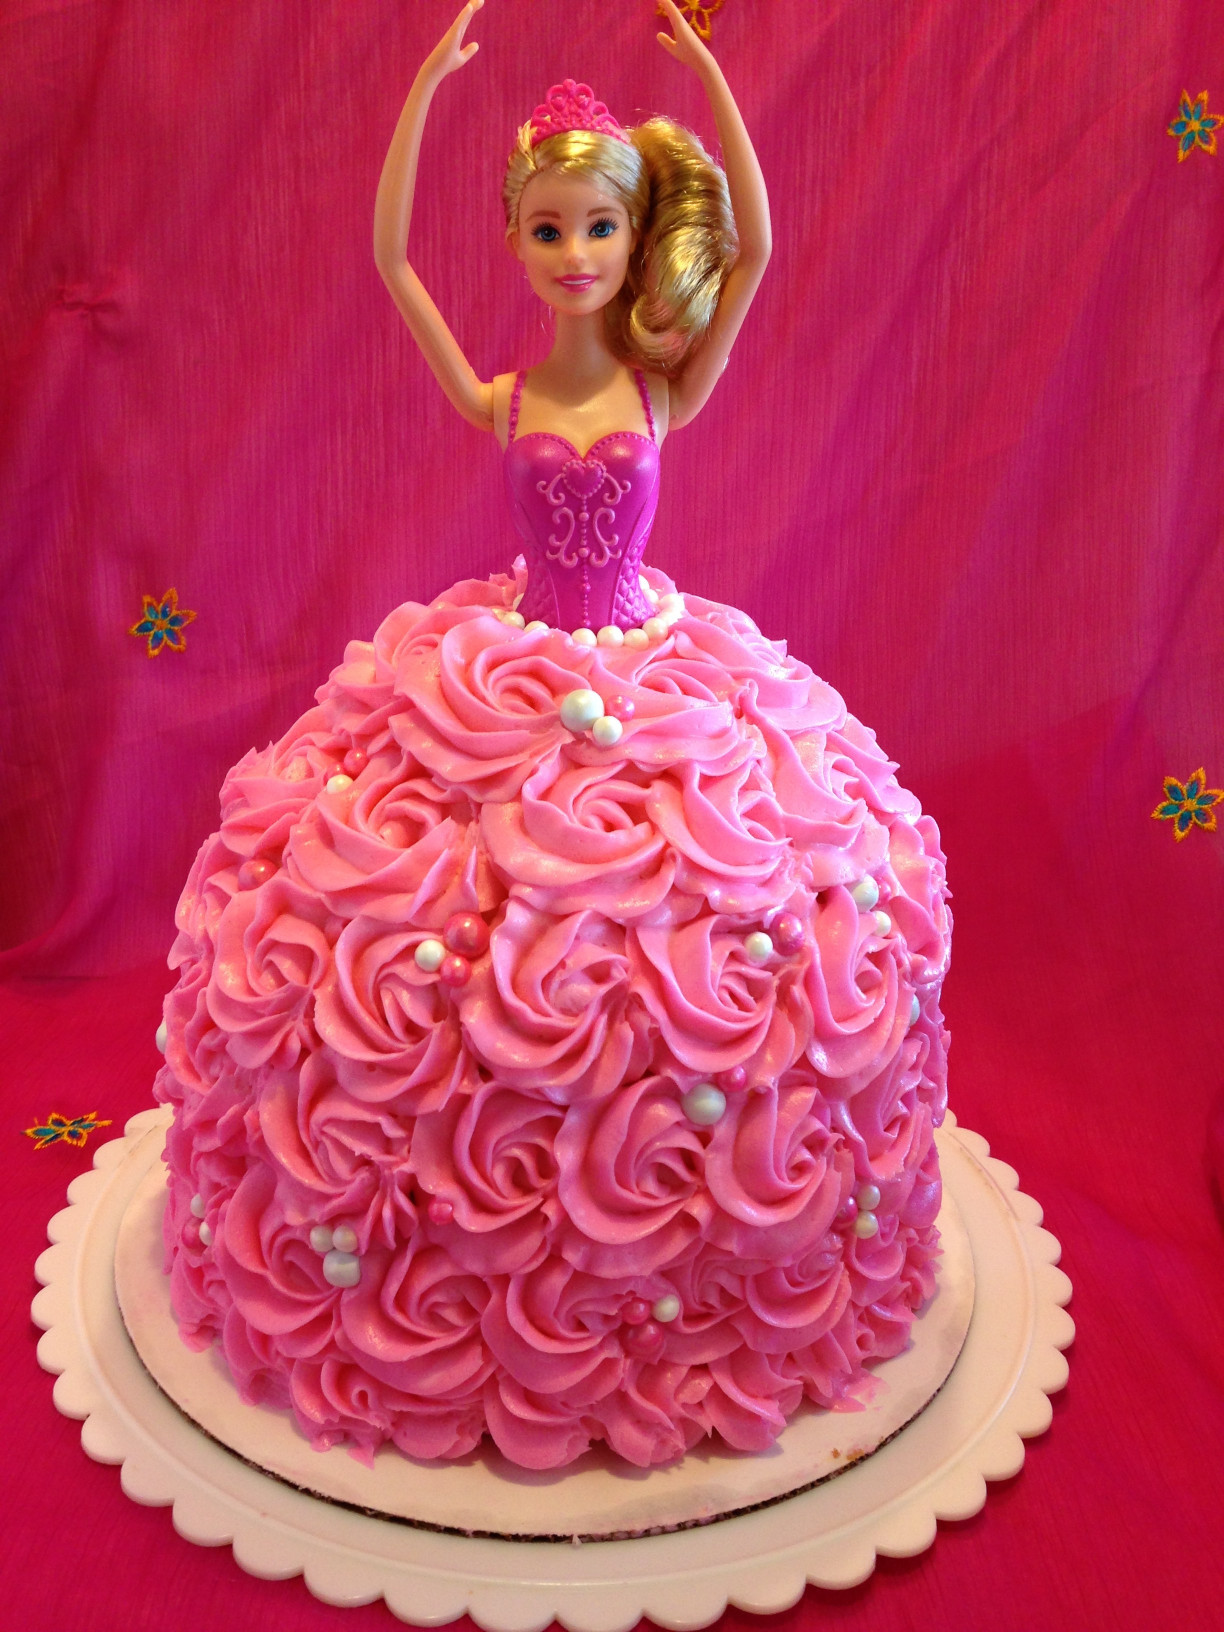 Barbie Birthday Cake
 Barbie Cake How To